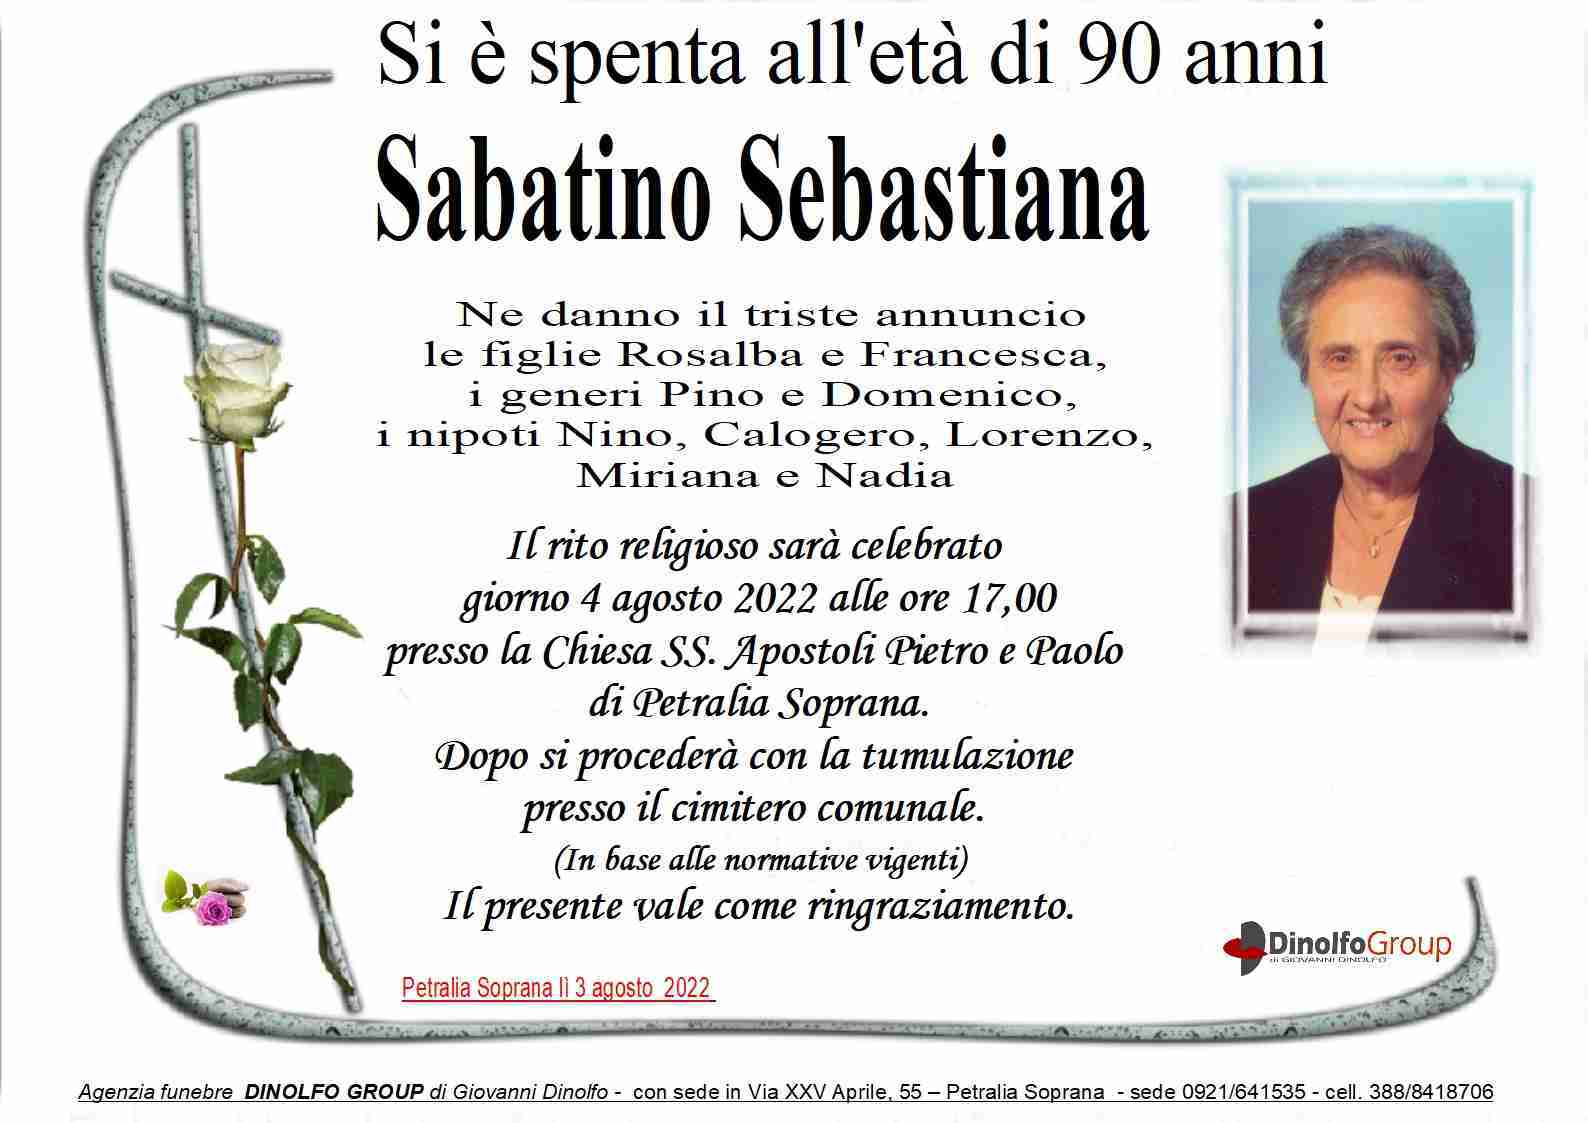 Sebastiana Sabatino